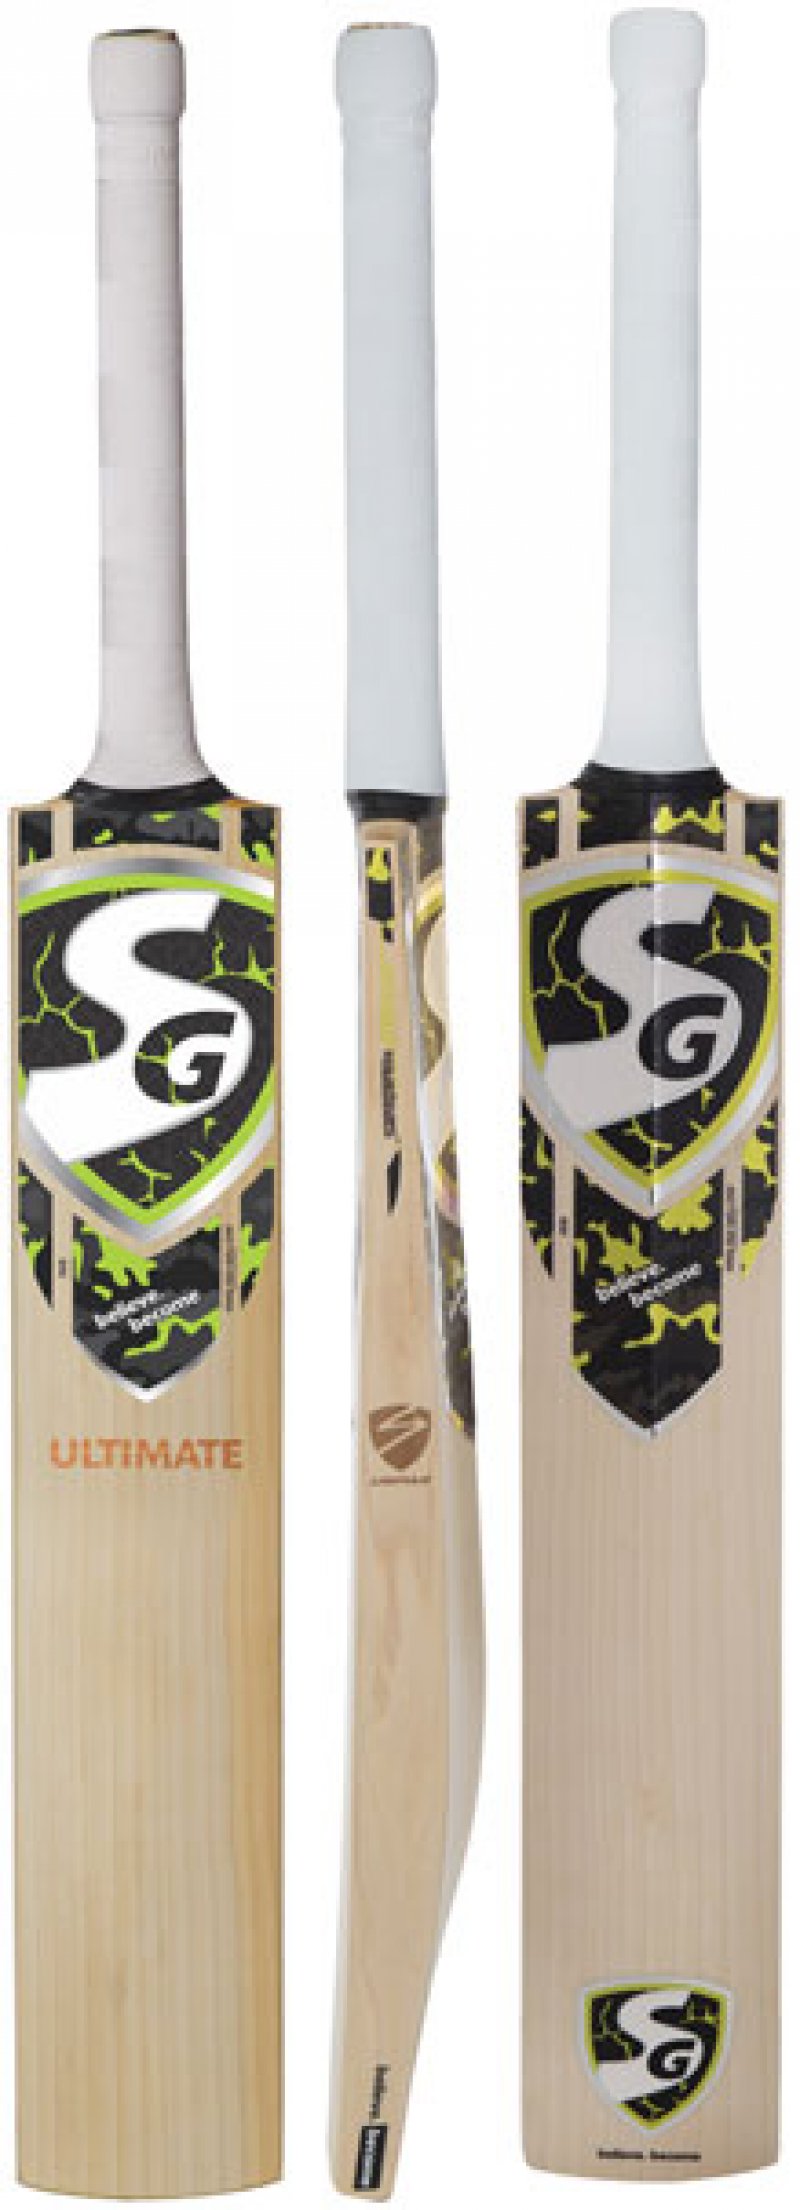 SG Liam Ultimate Cricket Bat